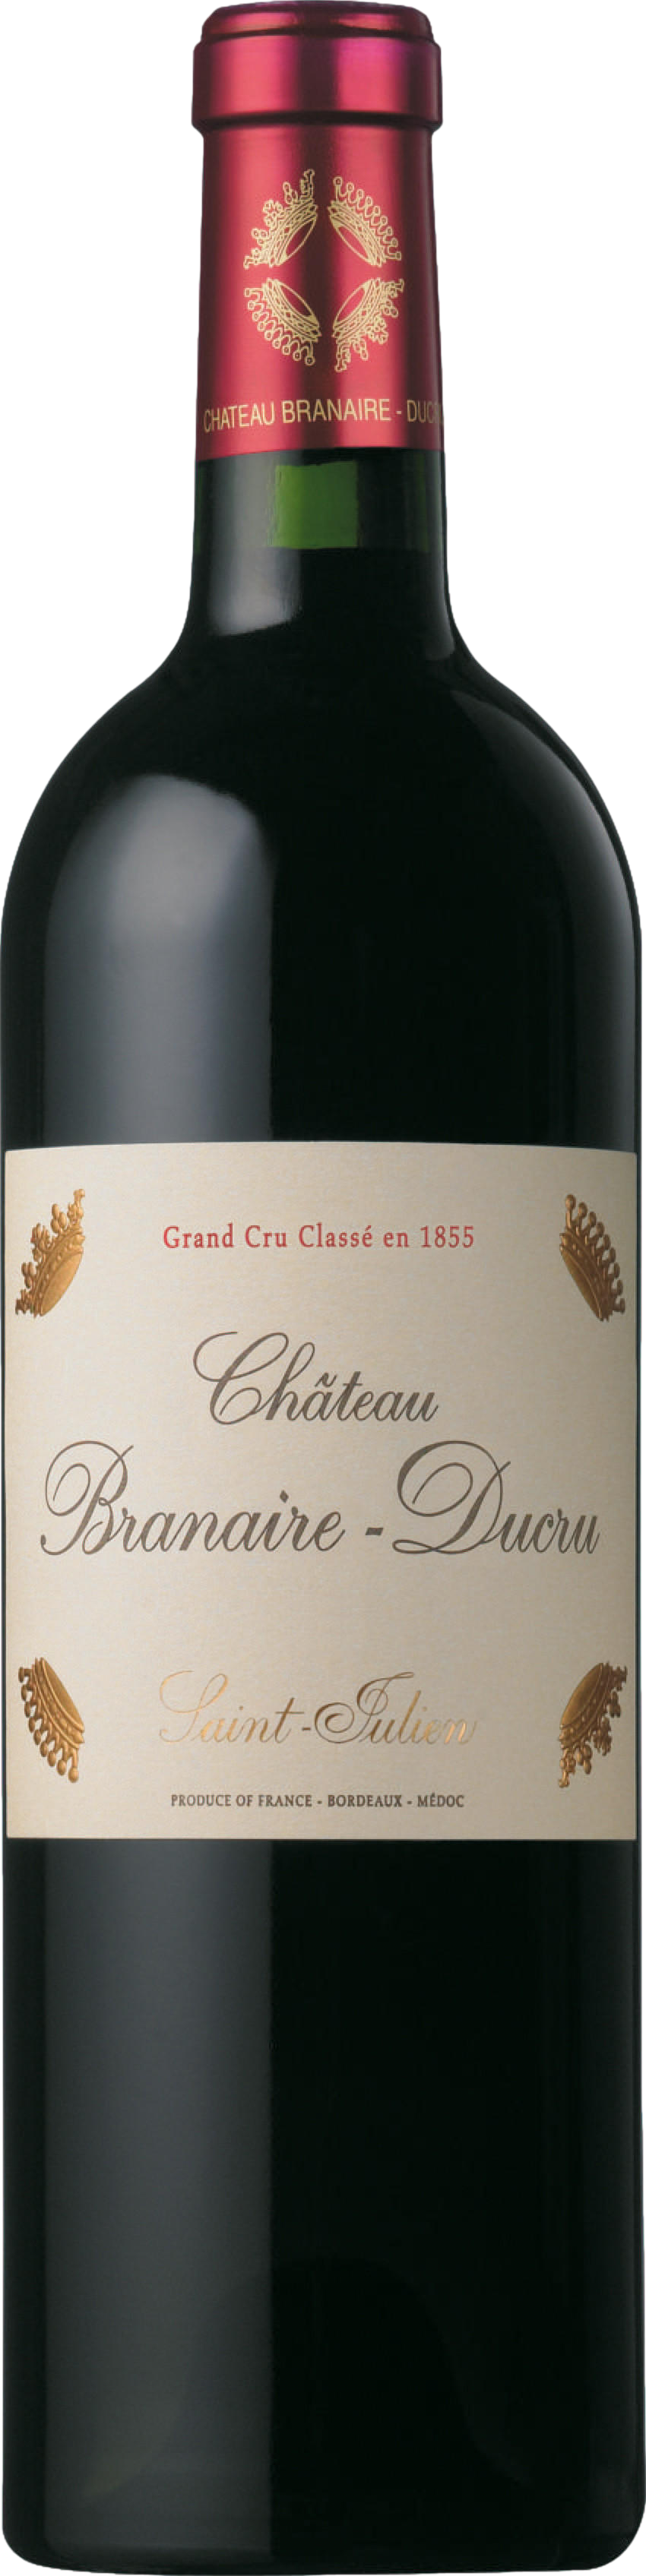 Chateau Branaire-Ducru 2018 Chateau Branaire-Ducru 8wines DACH